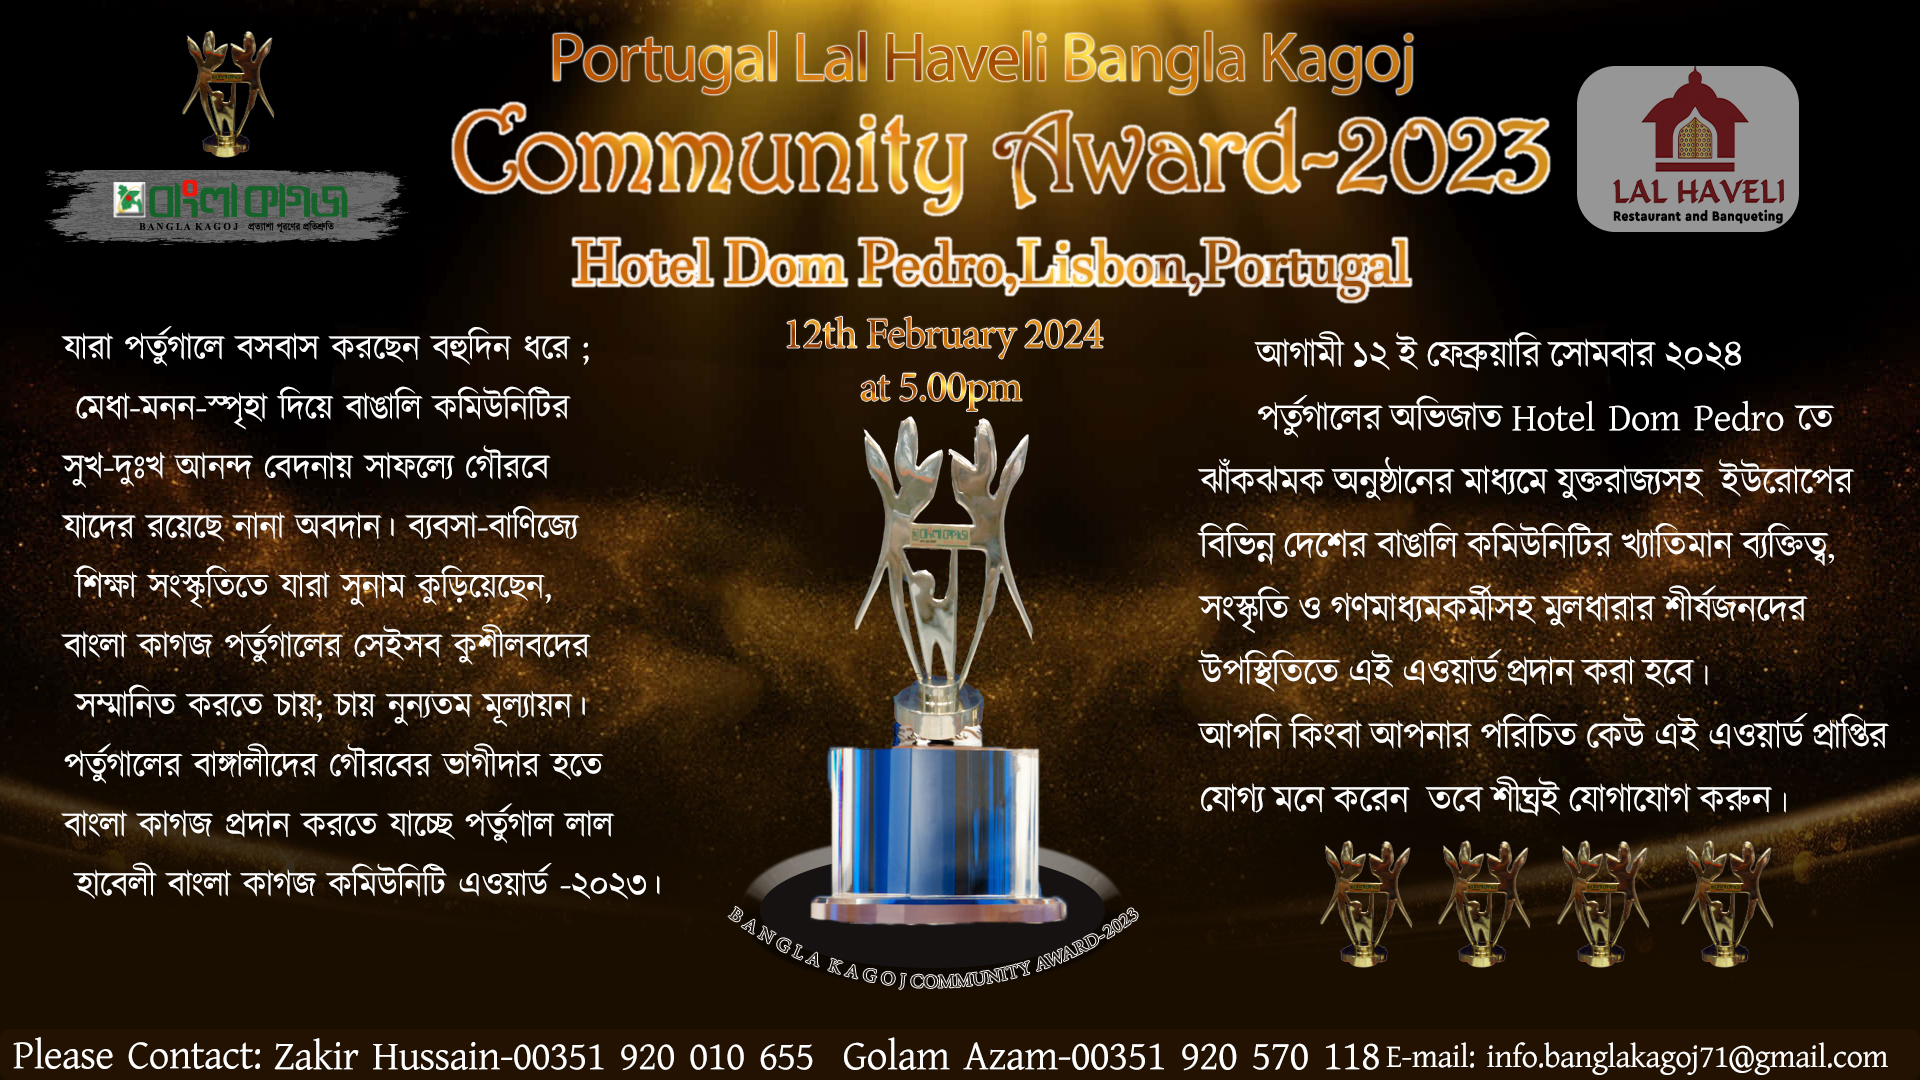 Portugal Lal Haveli Bangla Kagoj Community Award -2023